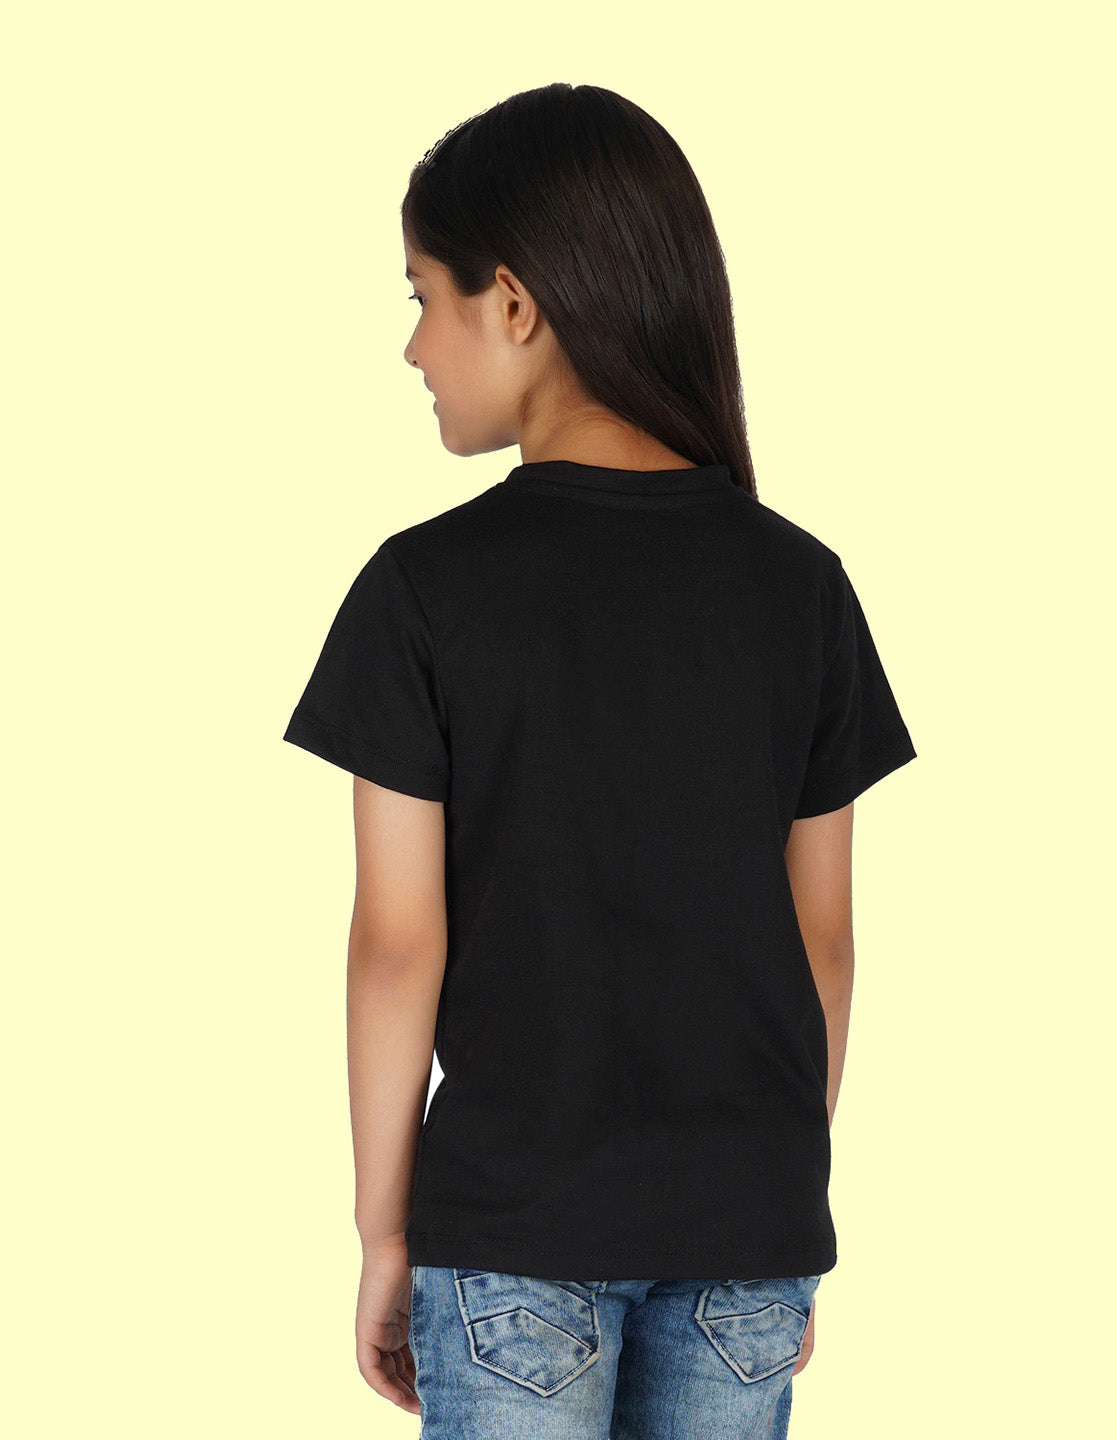 Nusyl Girls Half Sleeves Black Cat printed T-shirt